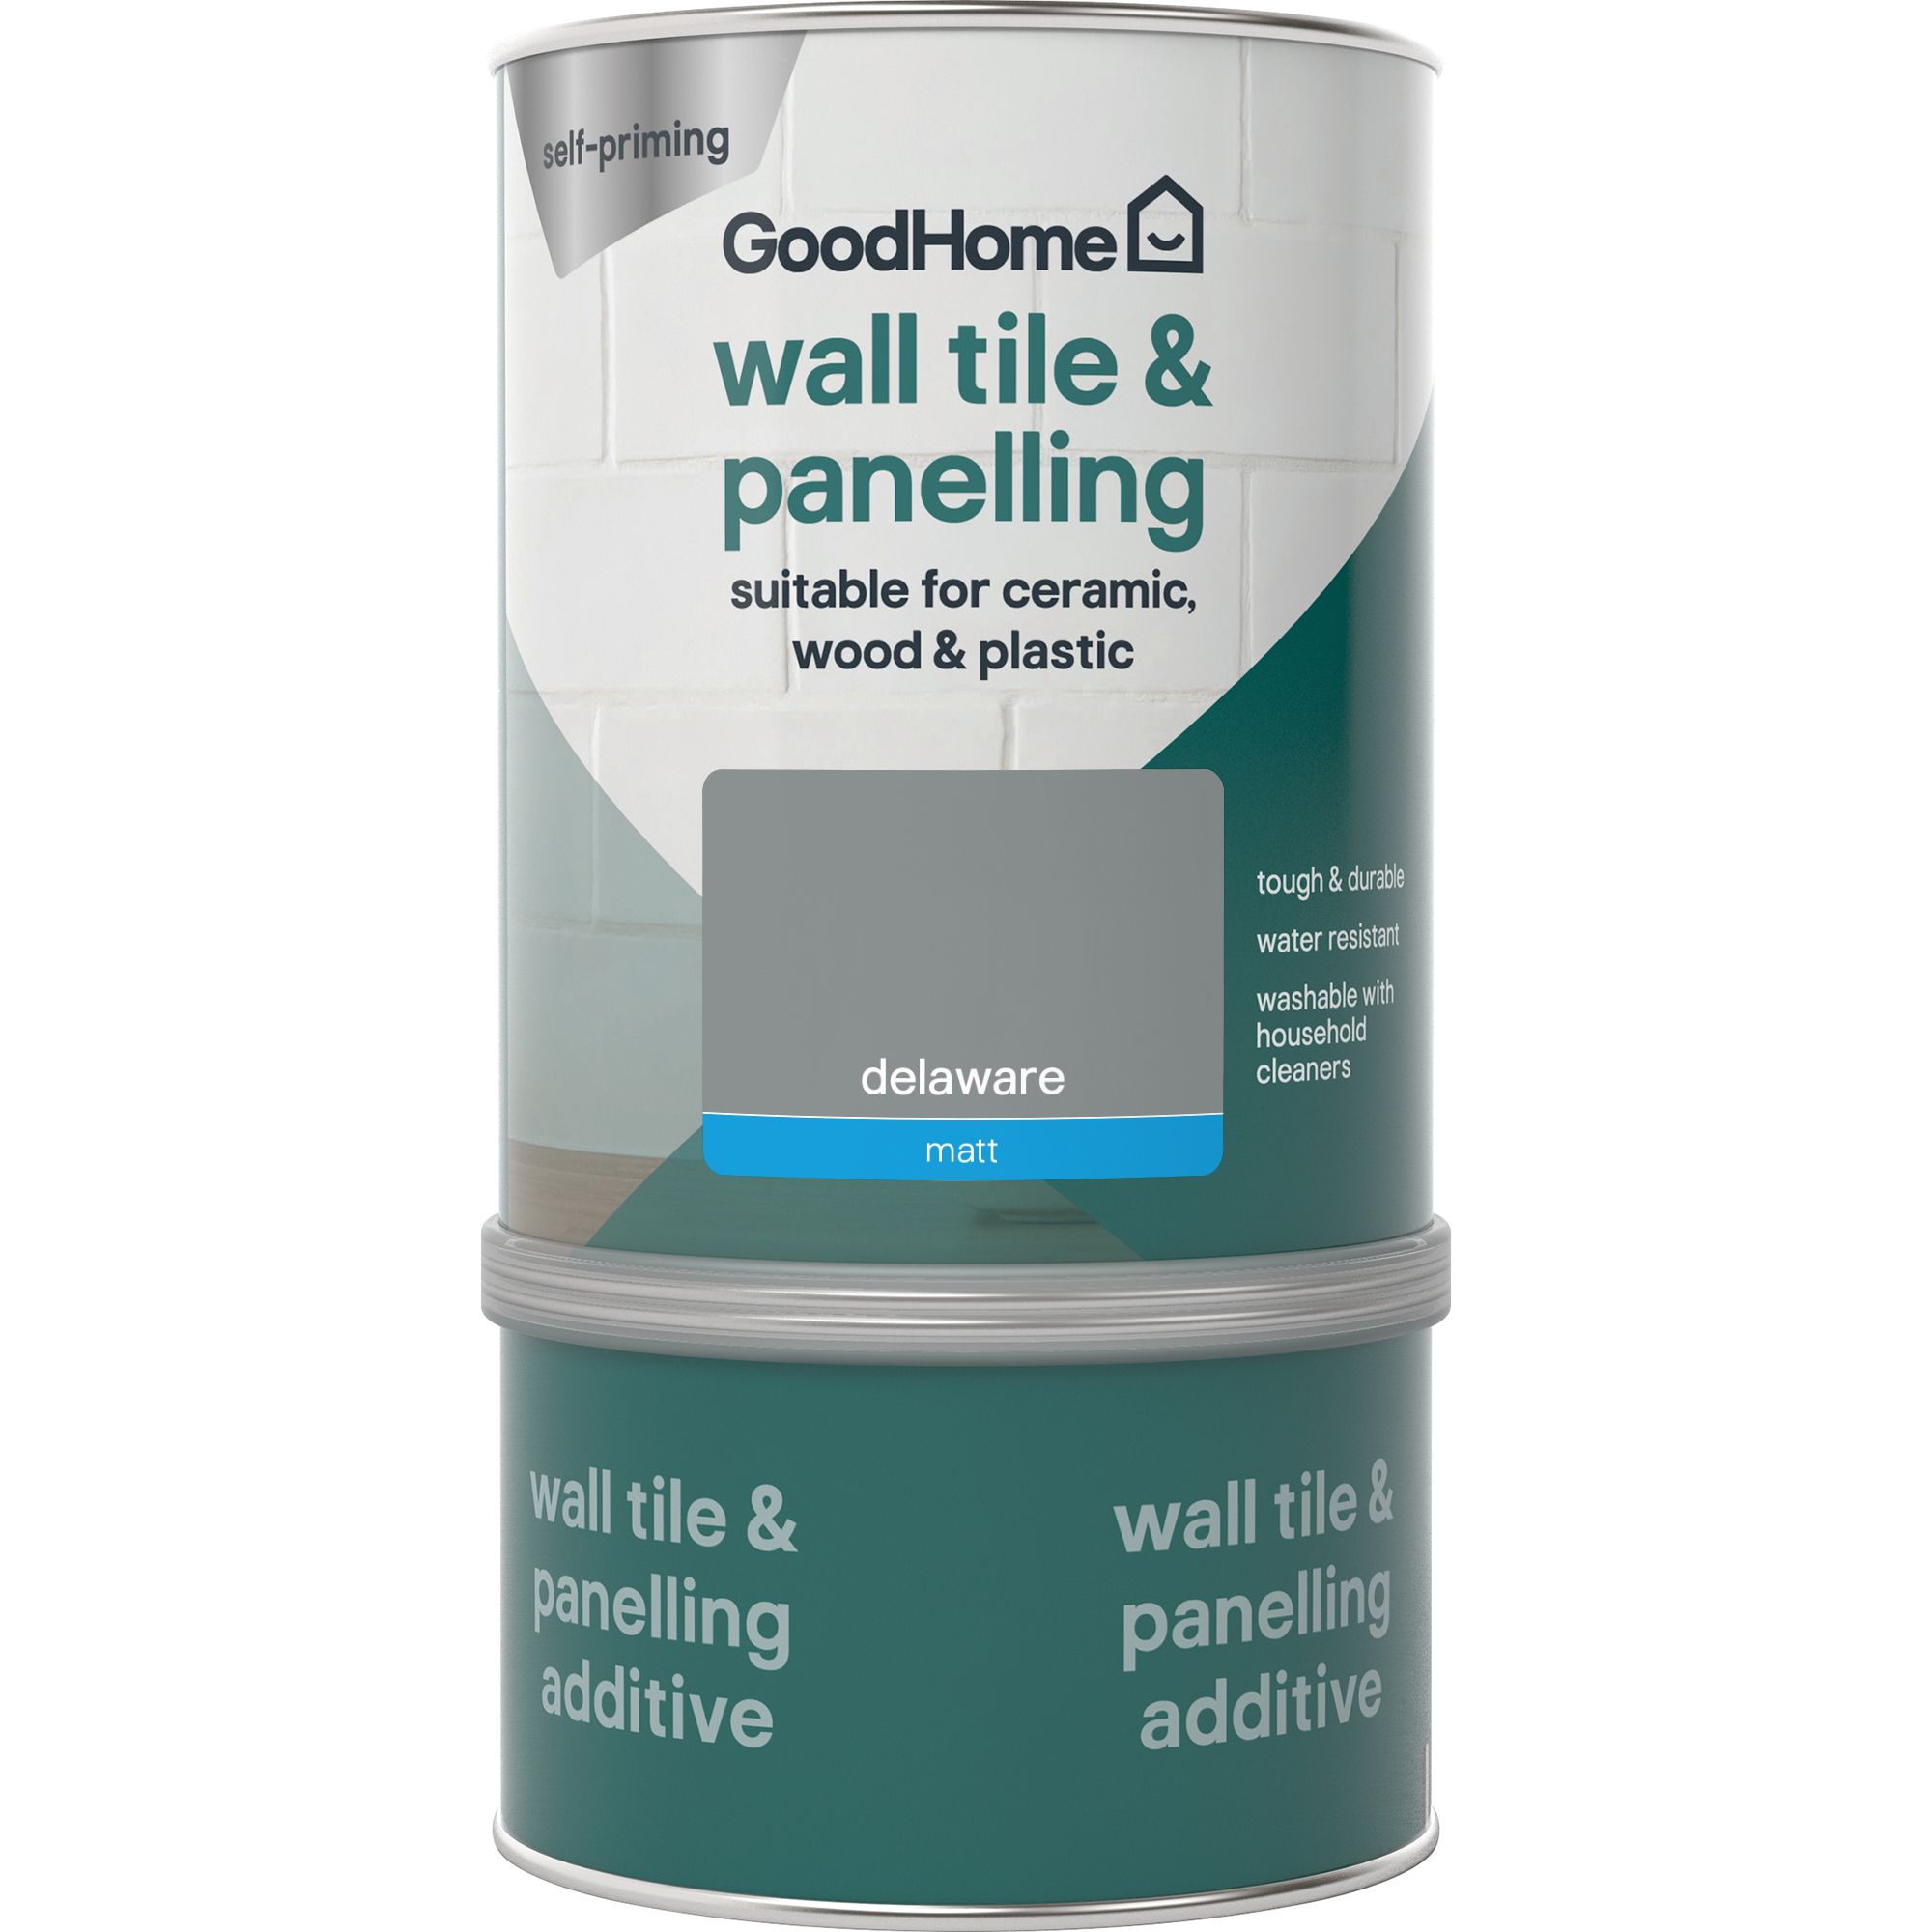 GoodHome Durable Delaware Matt Wall tile & panelling paint, 750ml